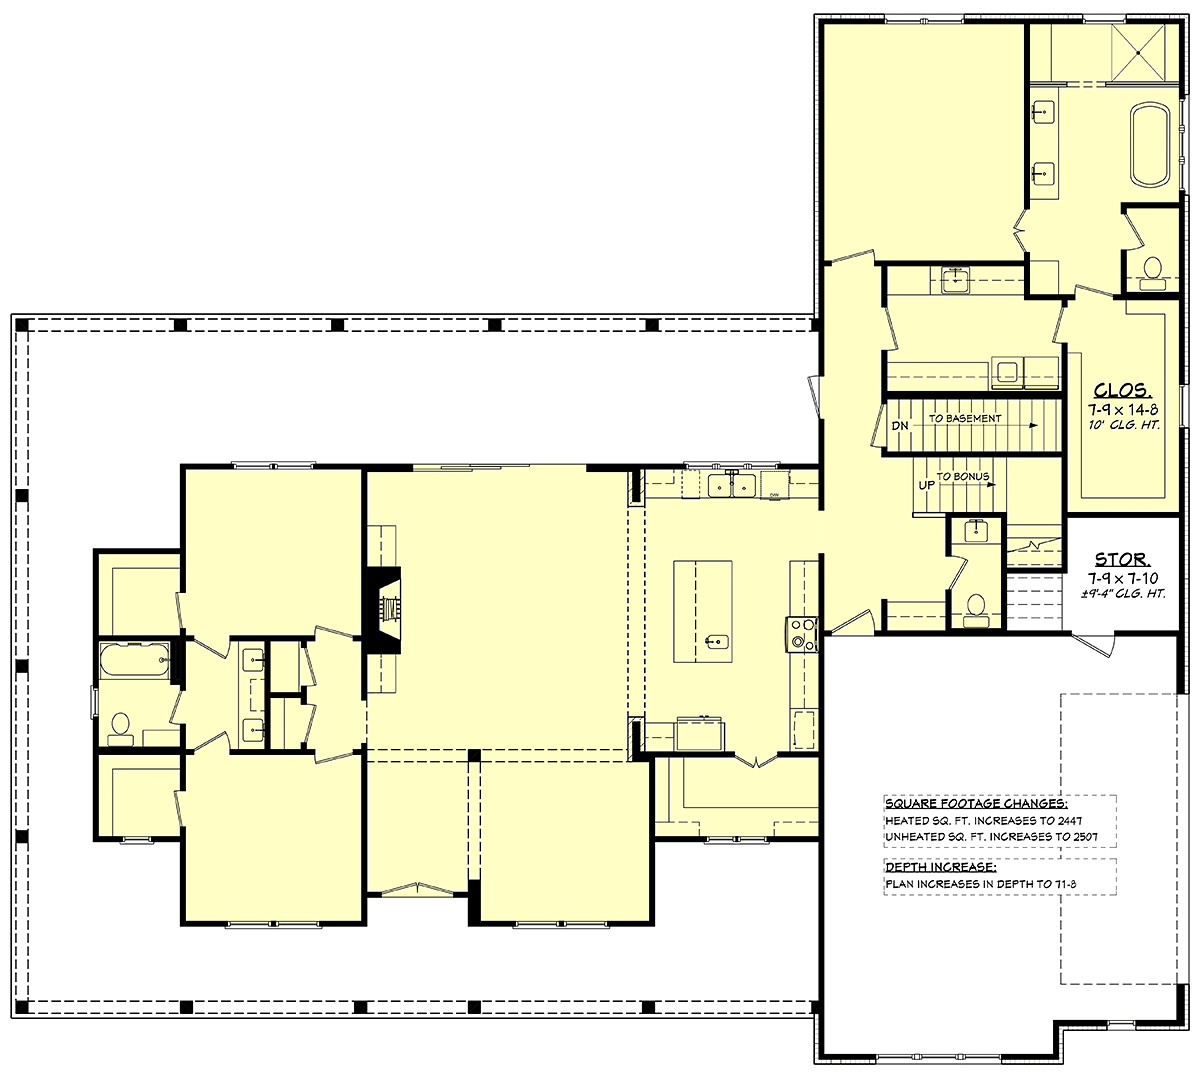 House Plan 82900 Alternate Level One